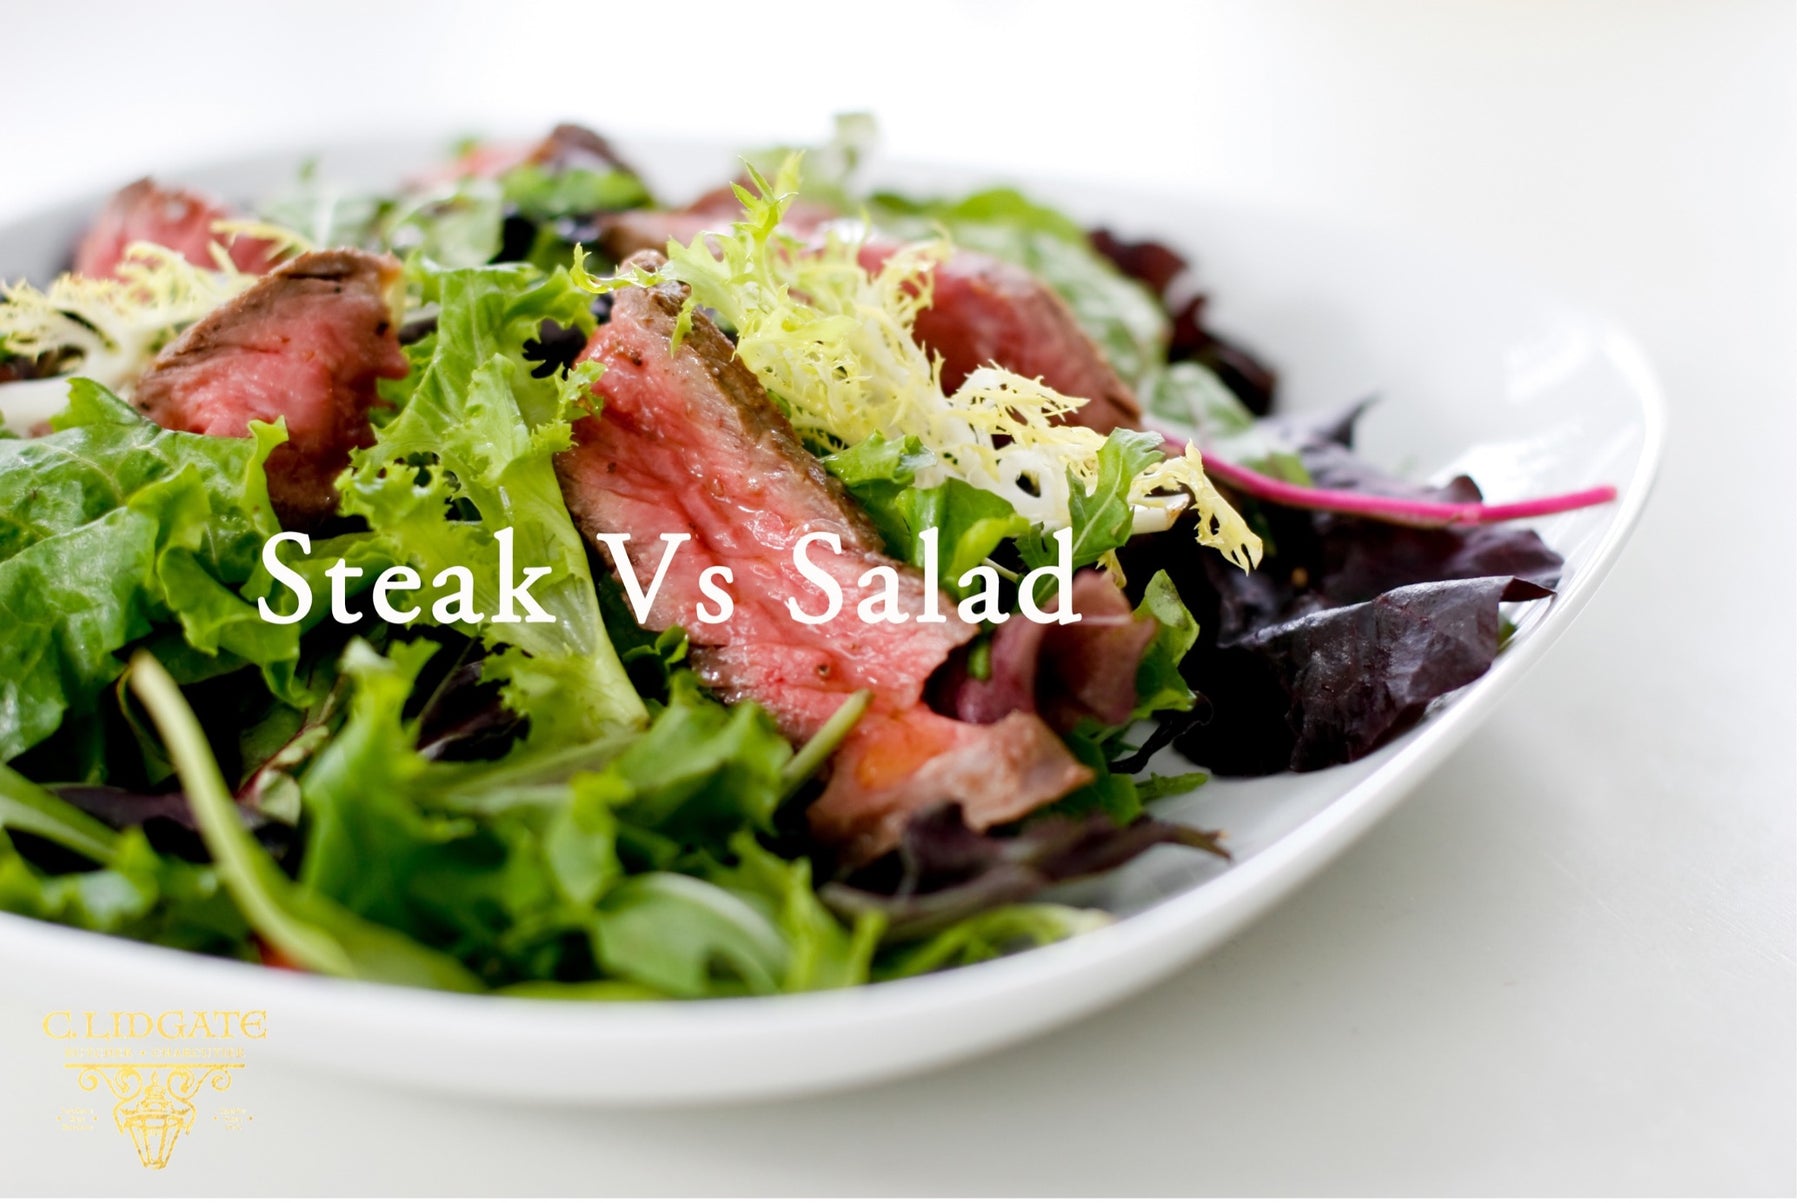 Steak vs Salad